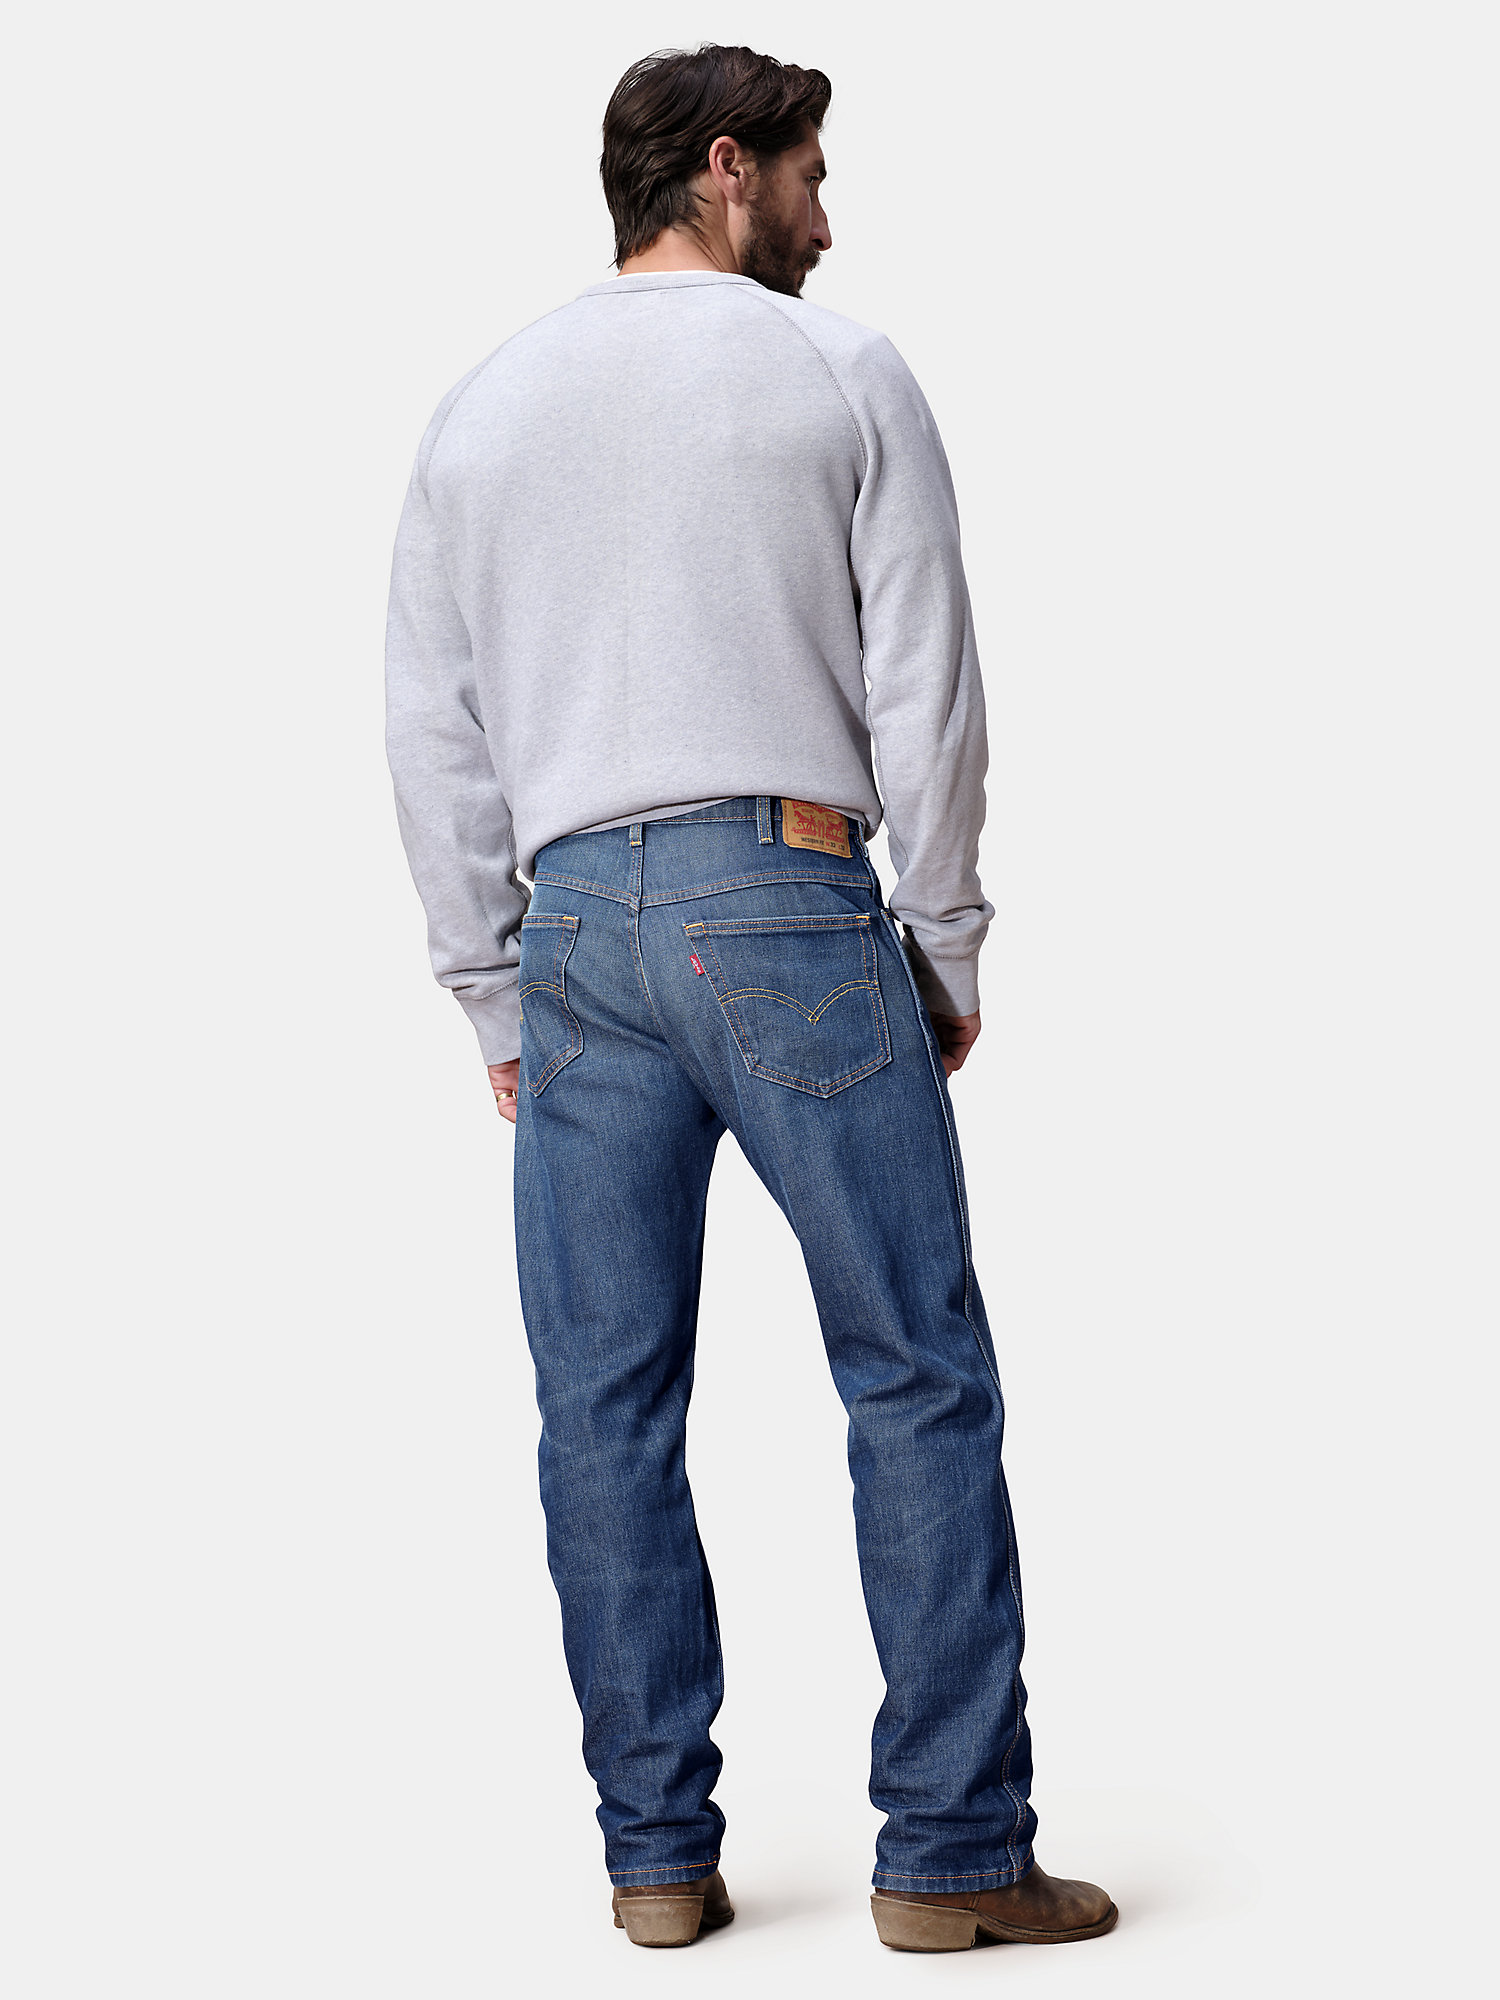 Levi's Men's Western Regular Fit Cowboy Jeans - image 3 of 9